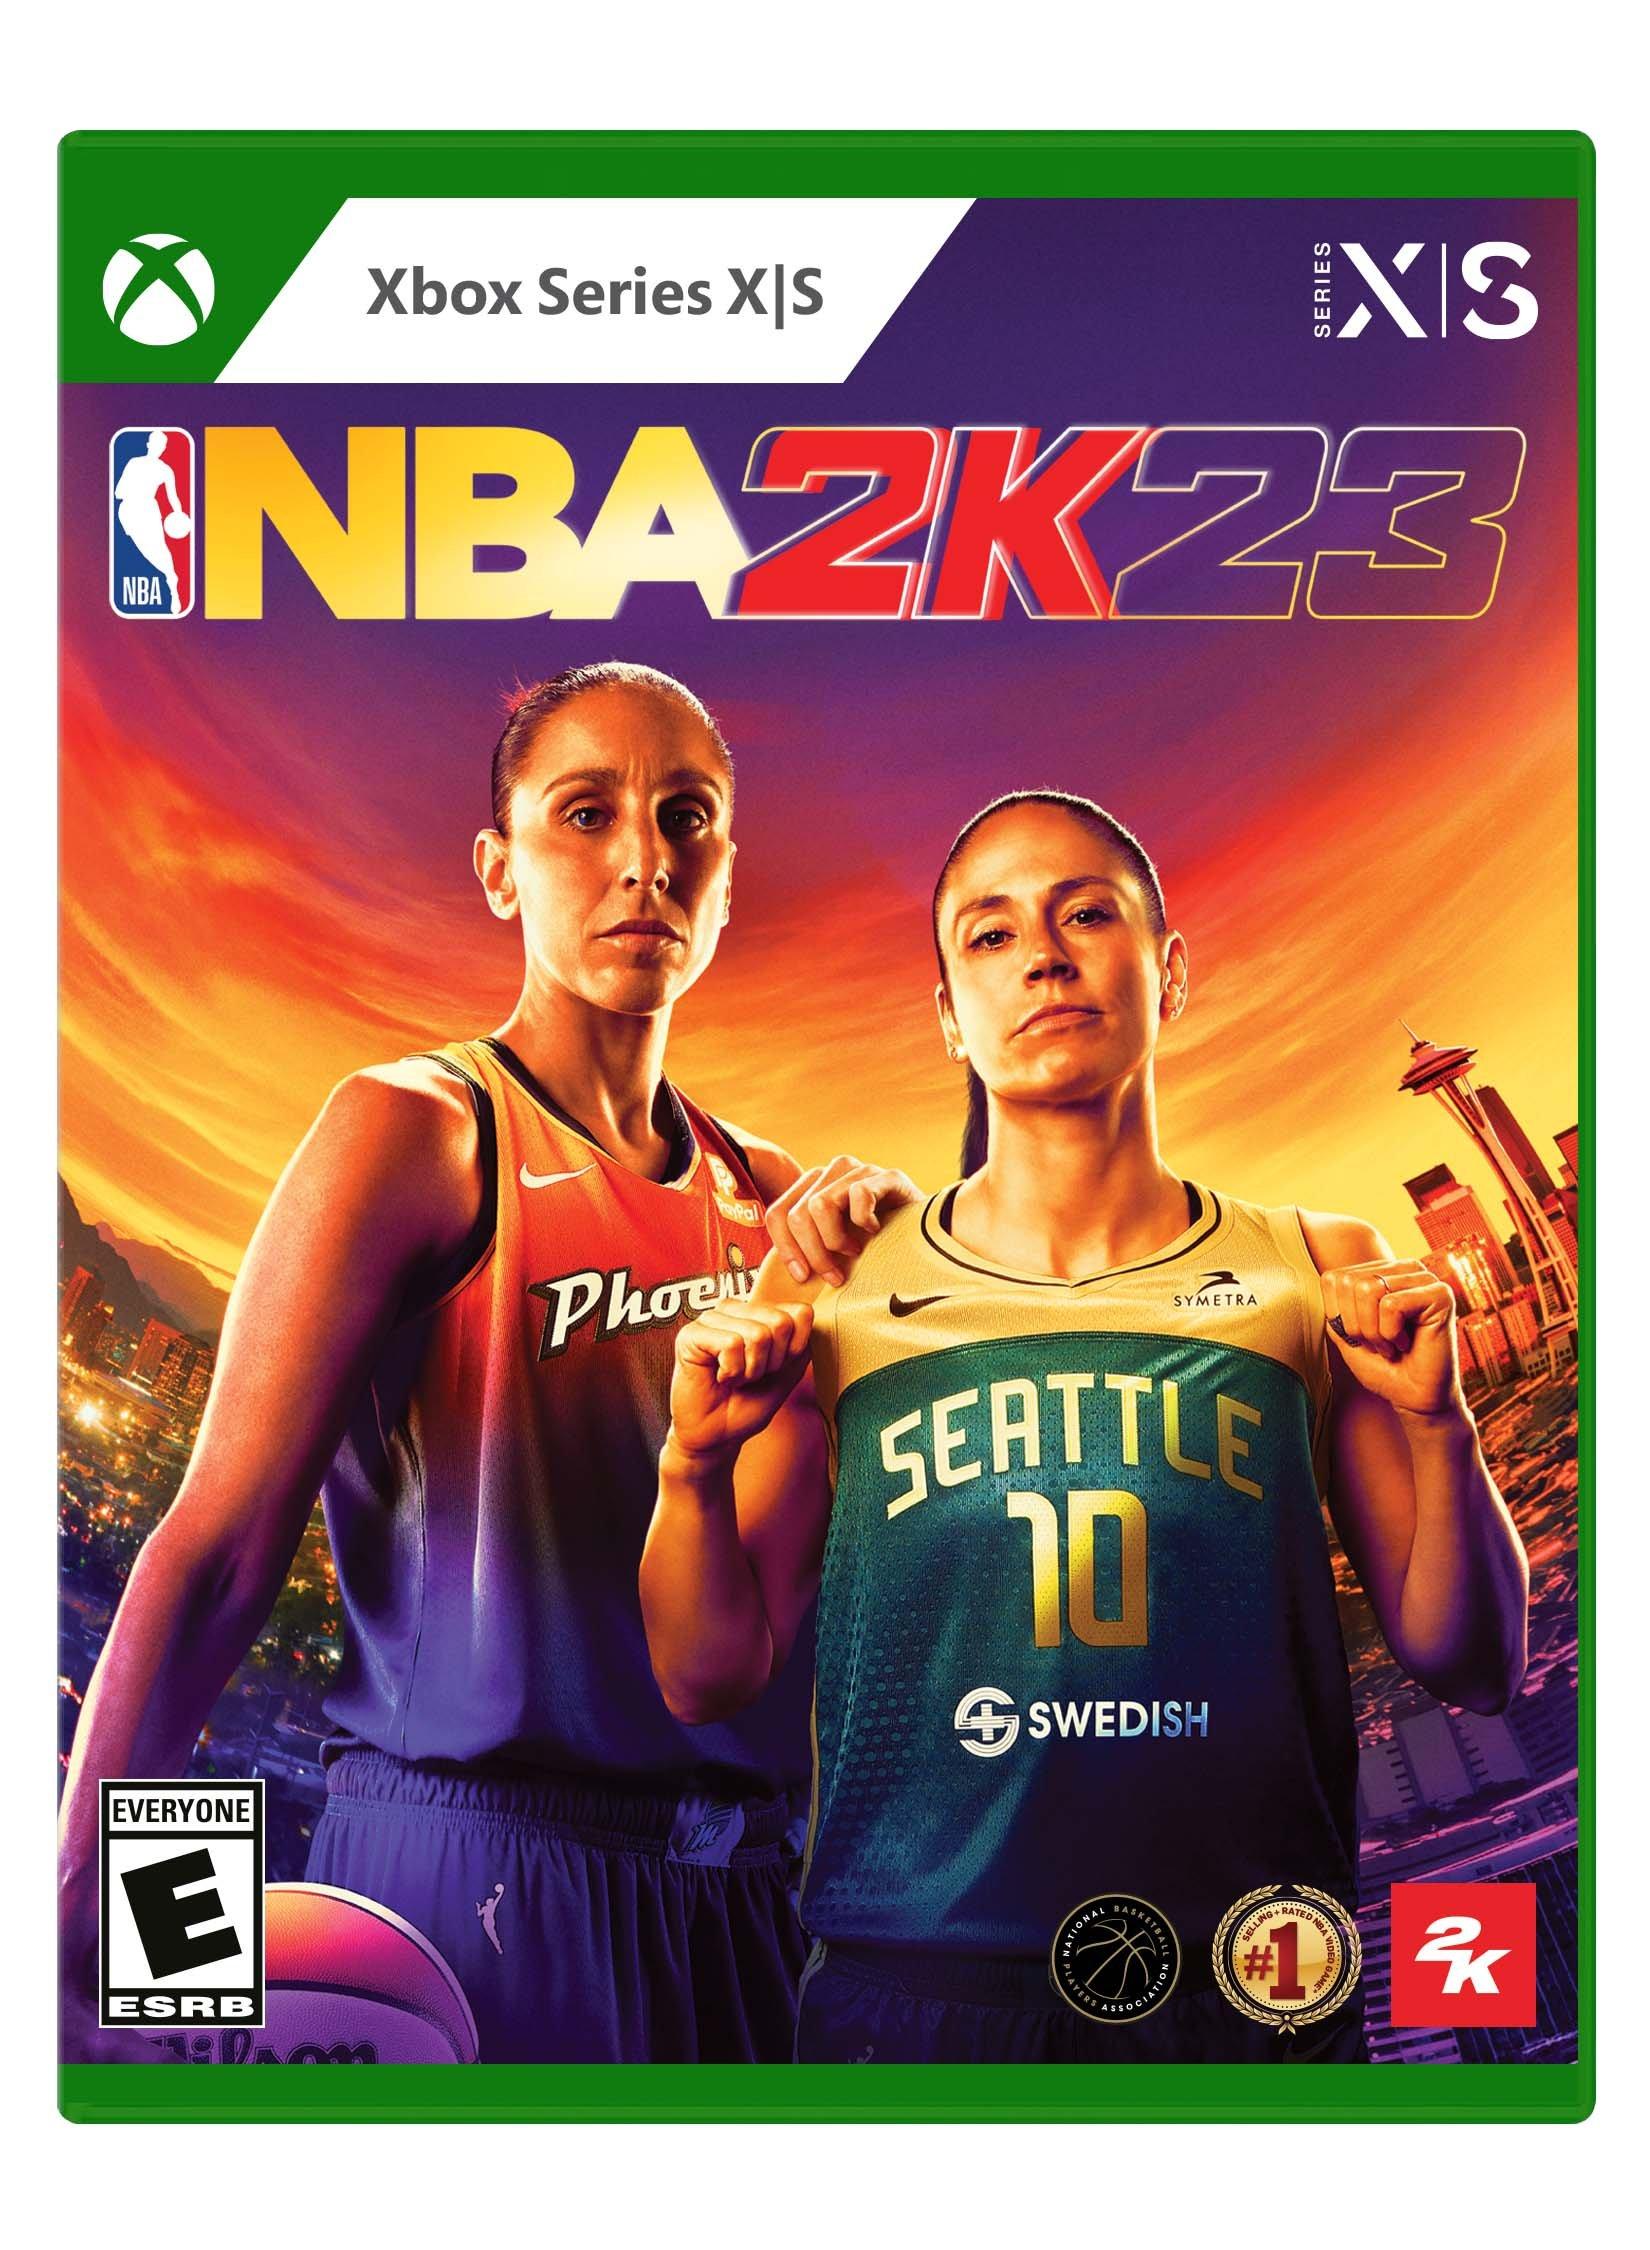 NBA 2K23 ALL CITY EDITION JERSEYS (PS5 & XBOX SERIES X/S) 